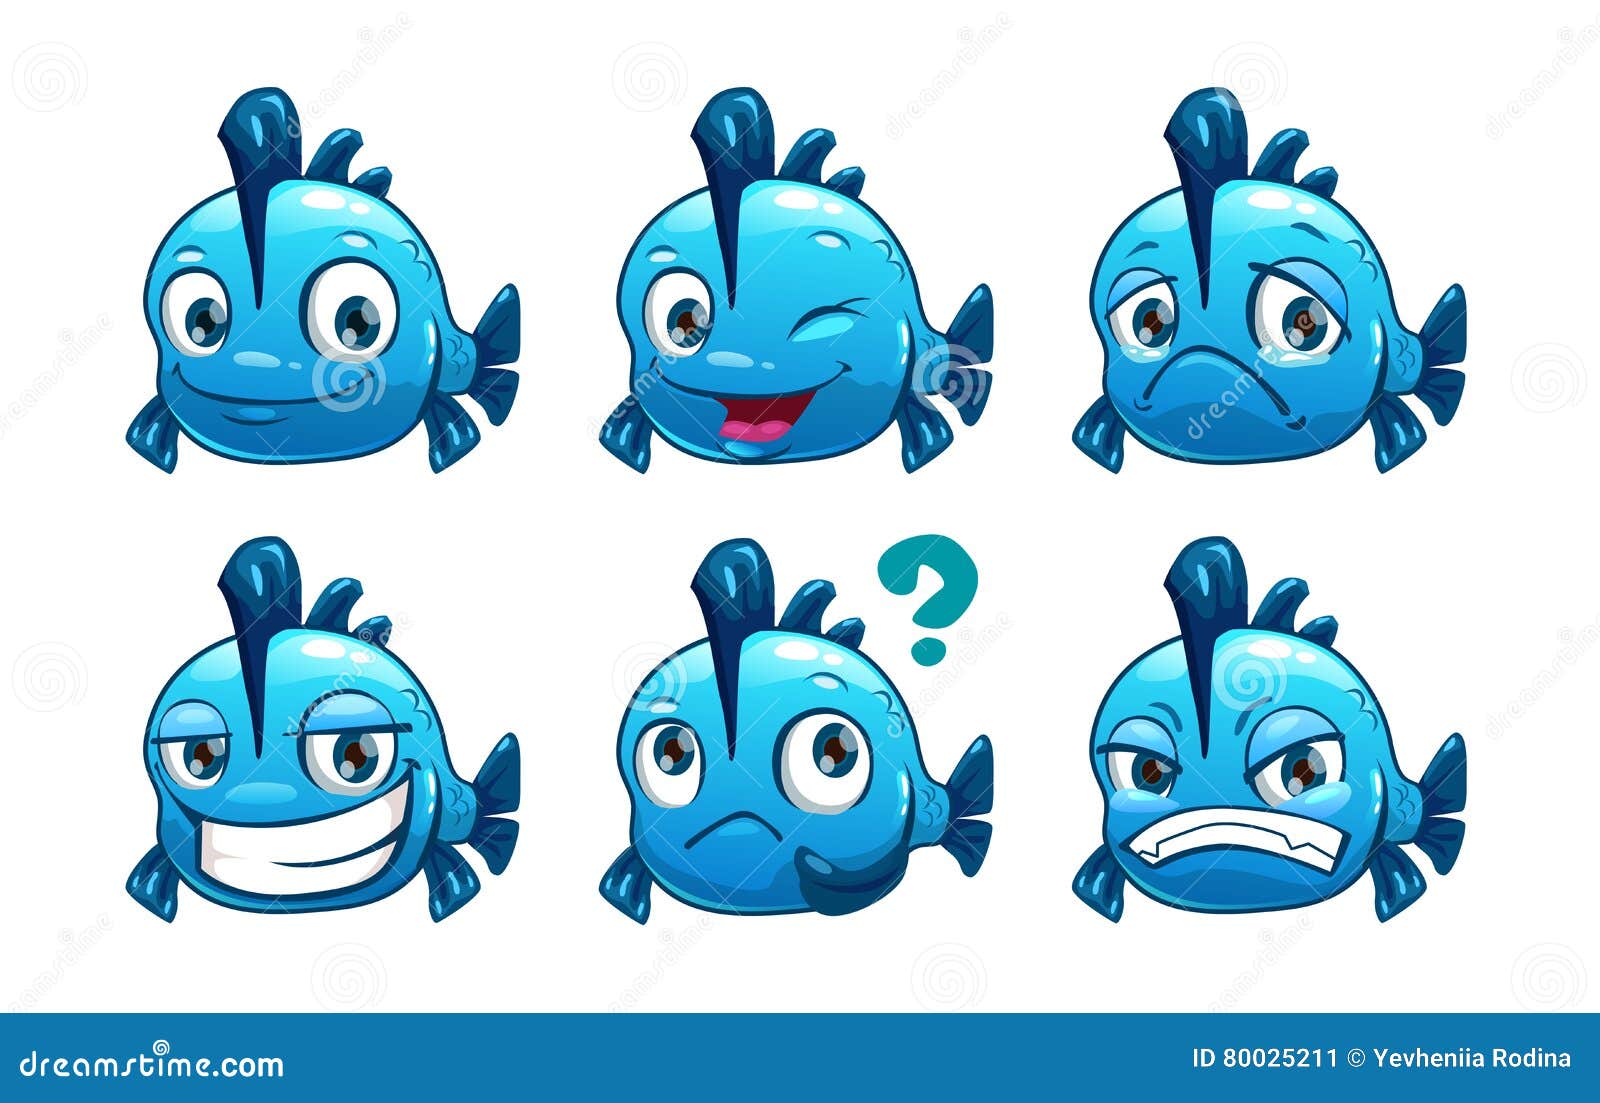 Funny cartoon blue fish stock vector. Illustration of cute - 80025211